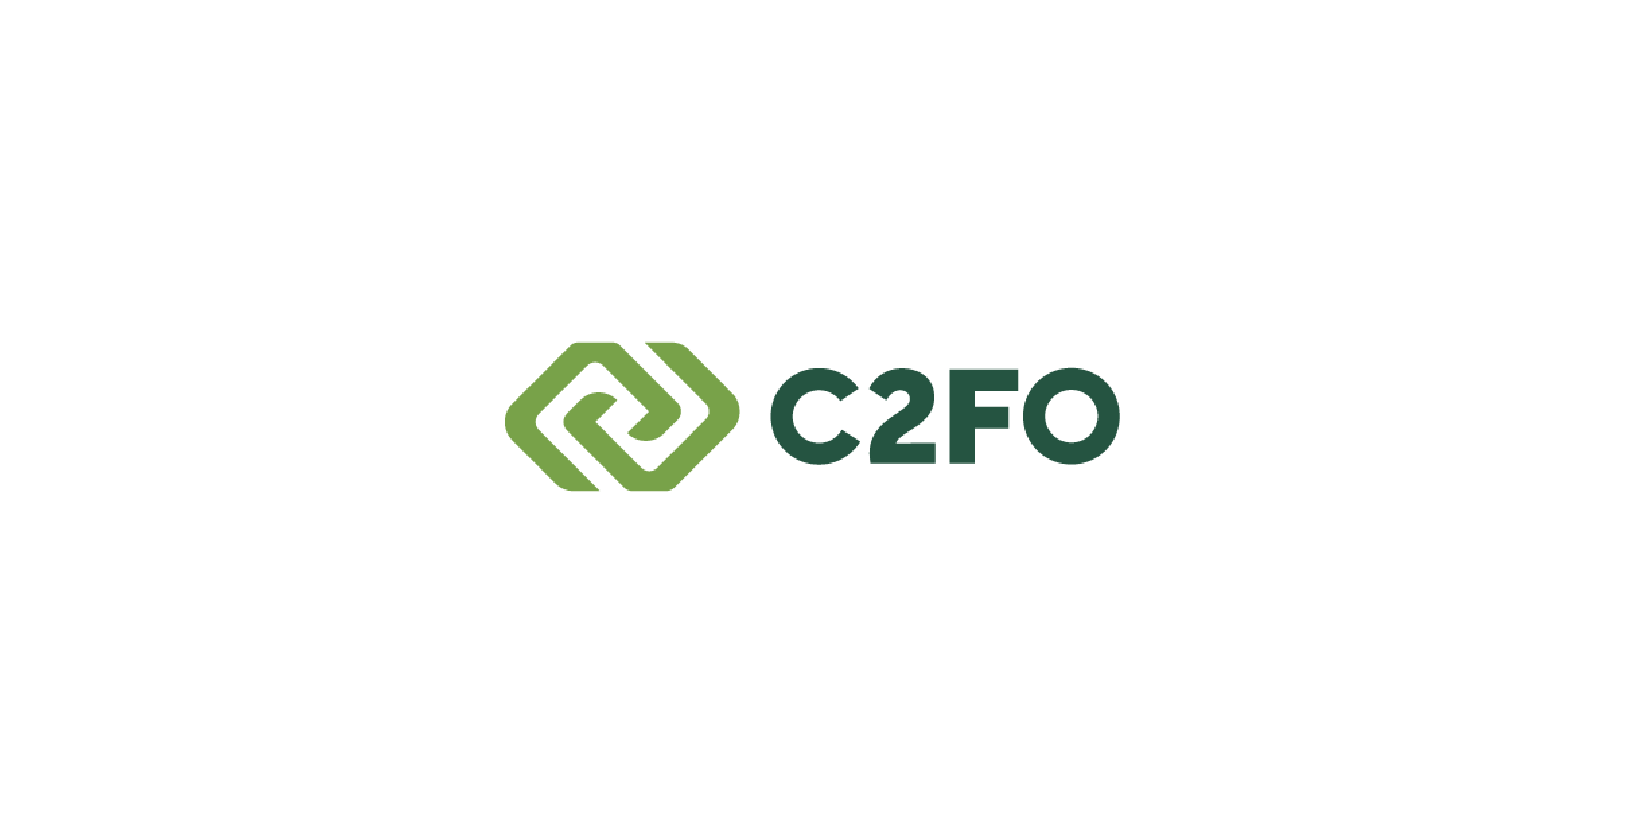 Vision Fund investment portfolio company C2FO's logo